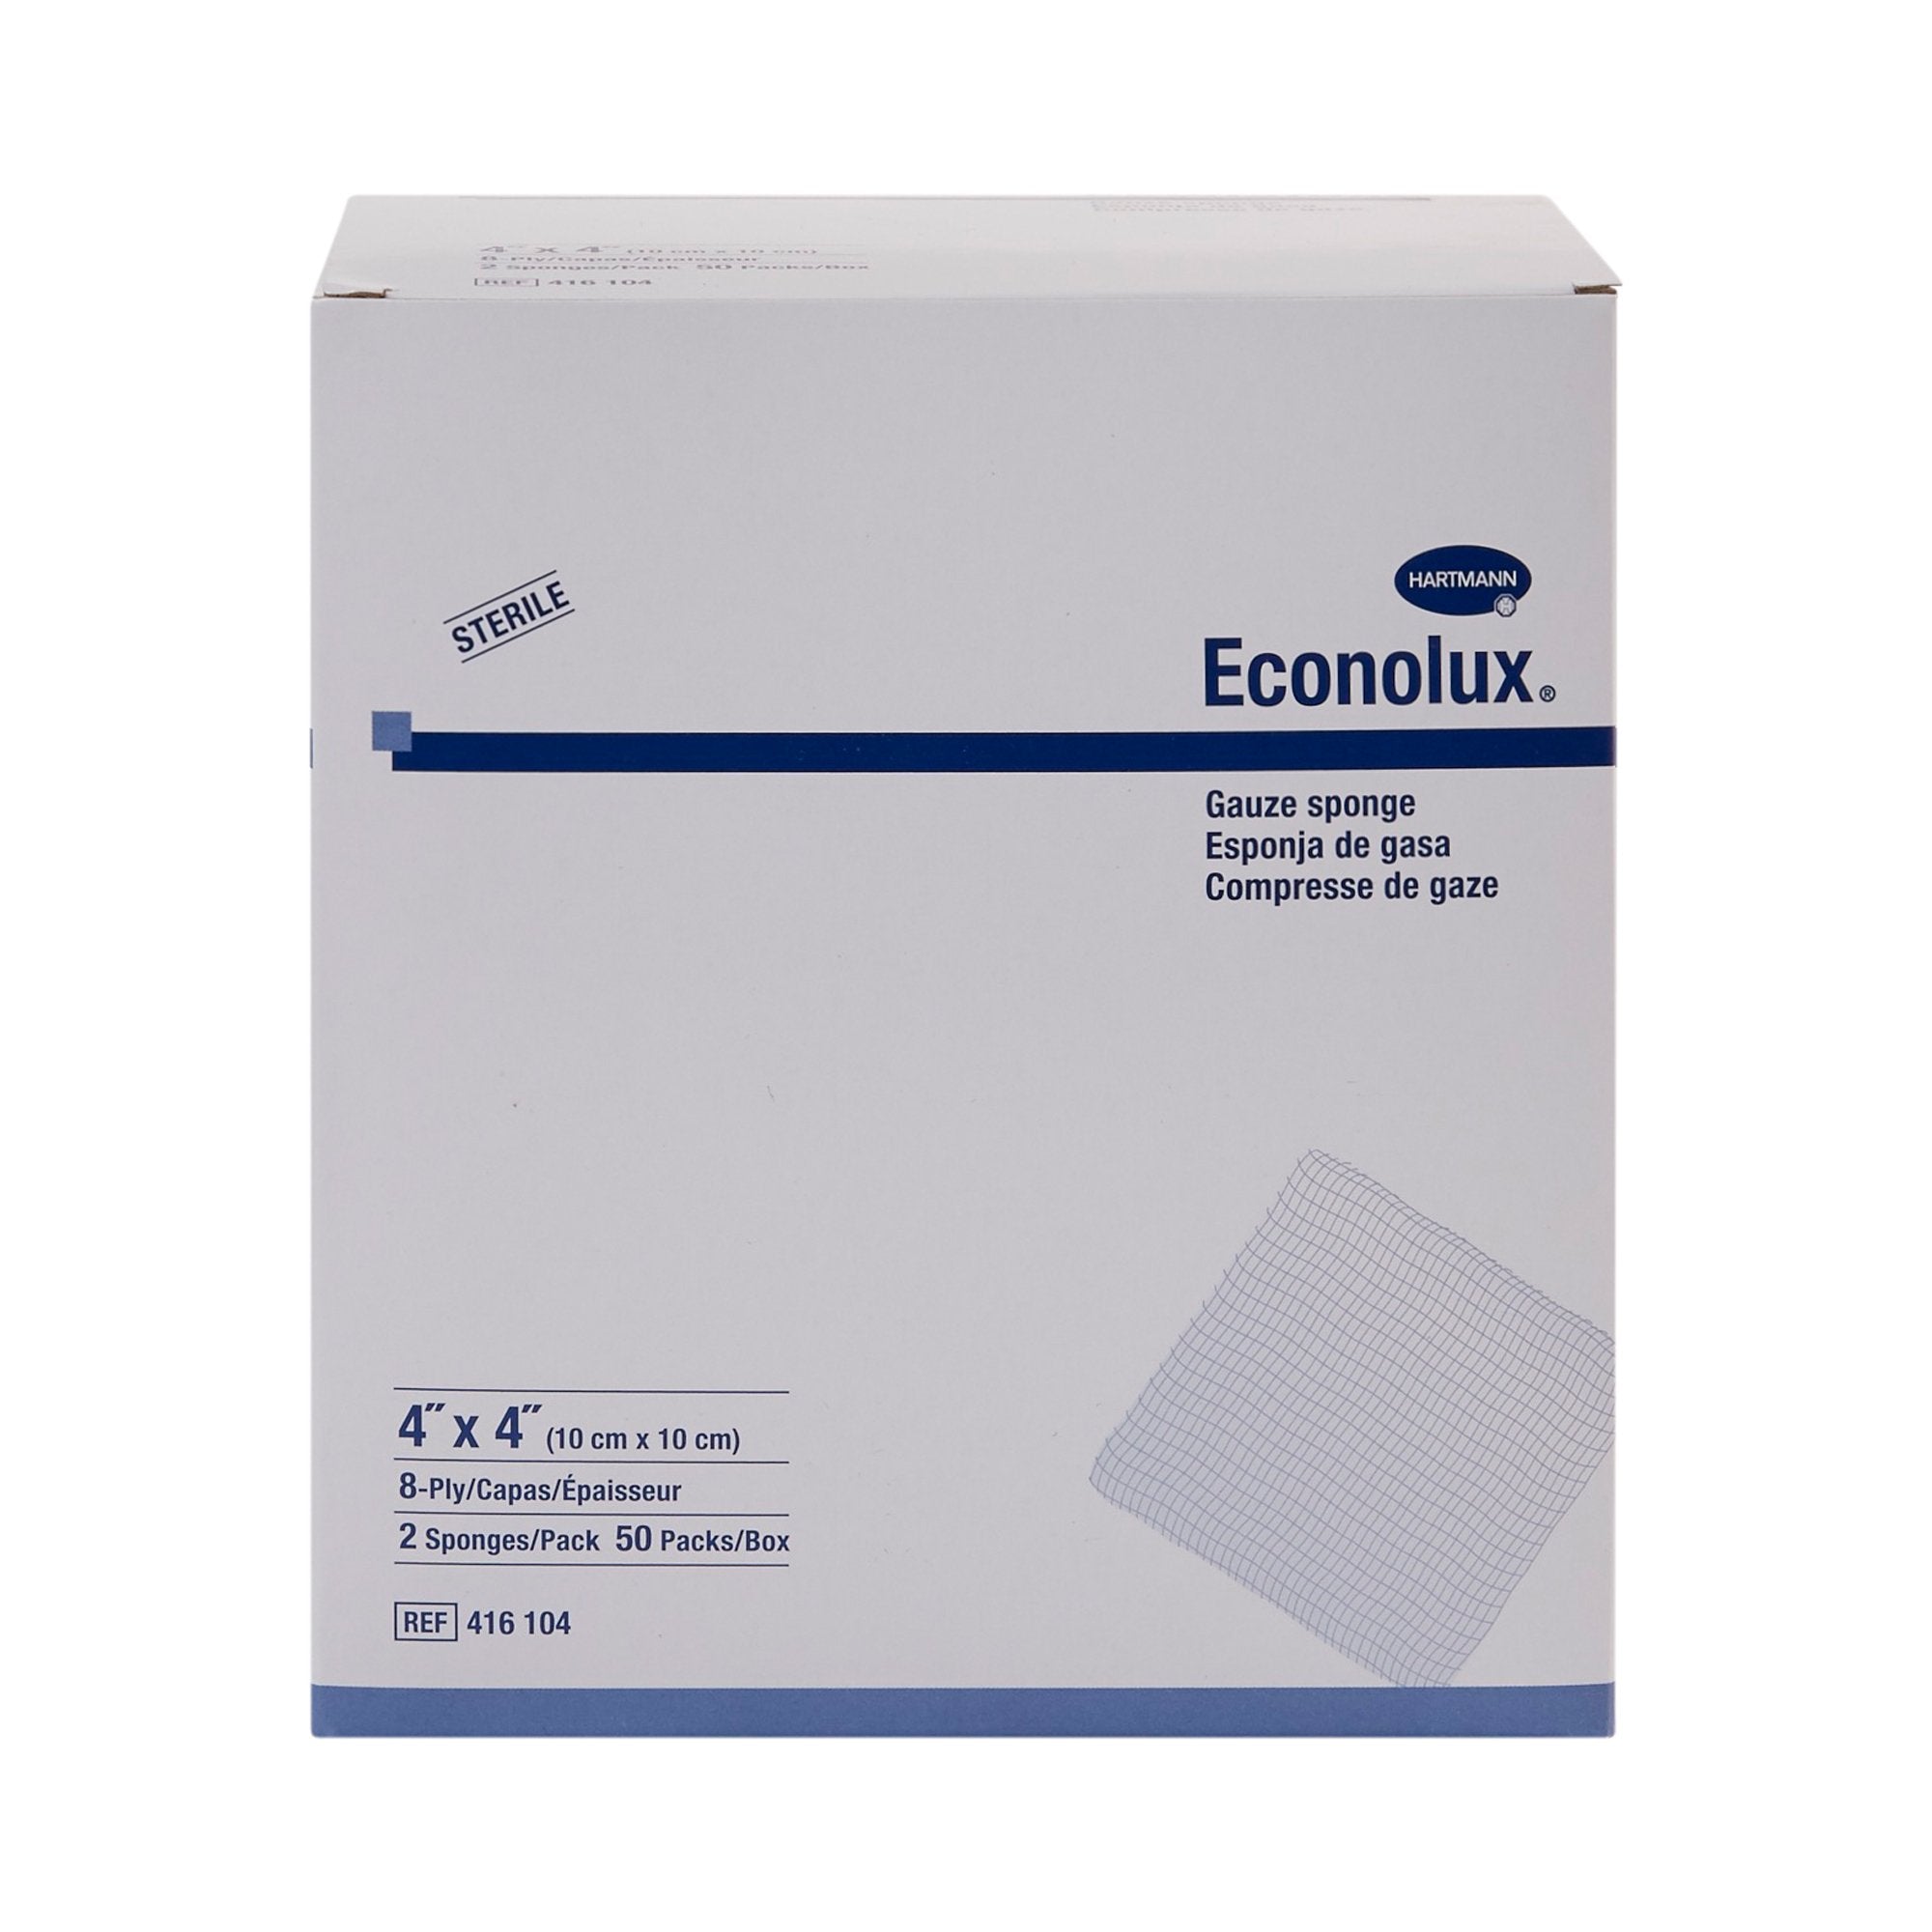 Gauze Sponge Econolux® 4 X 4 Inch 2 per Pack Sterile 8-Ply Square